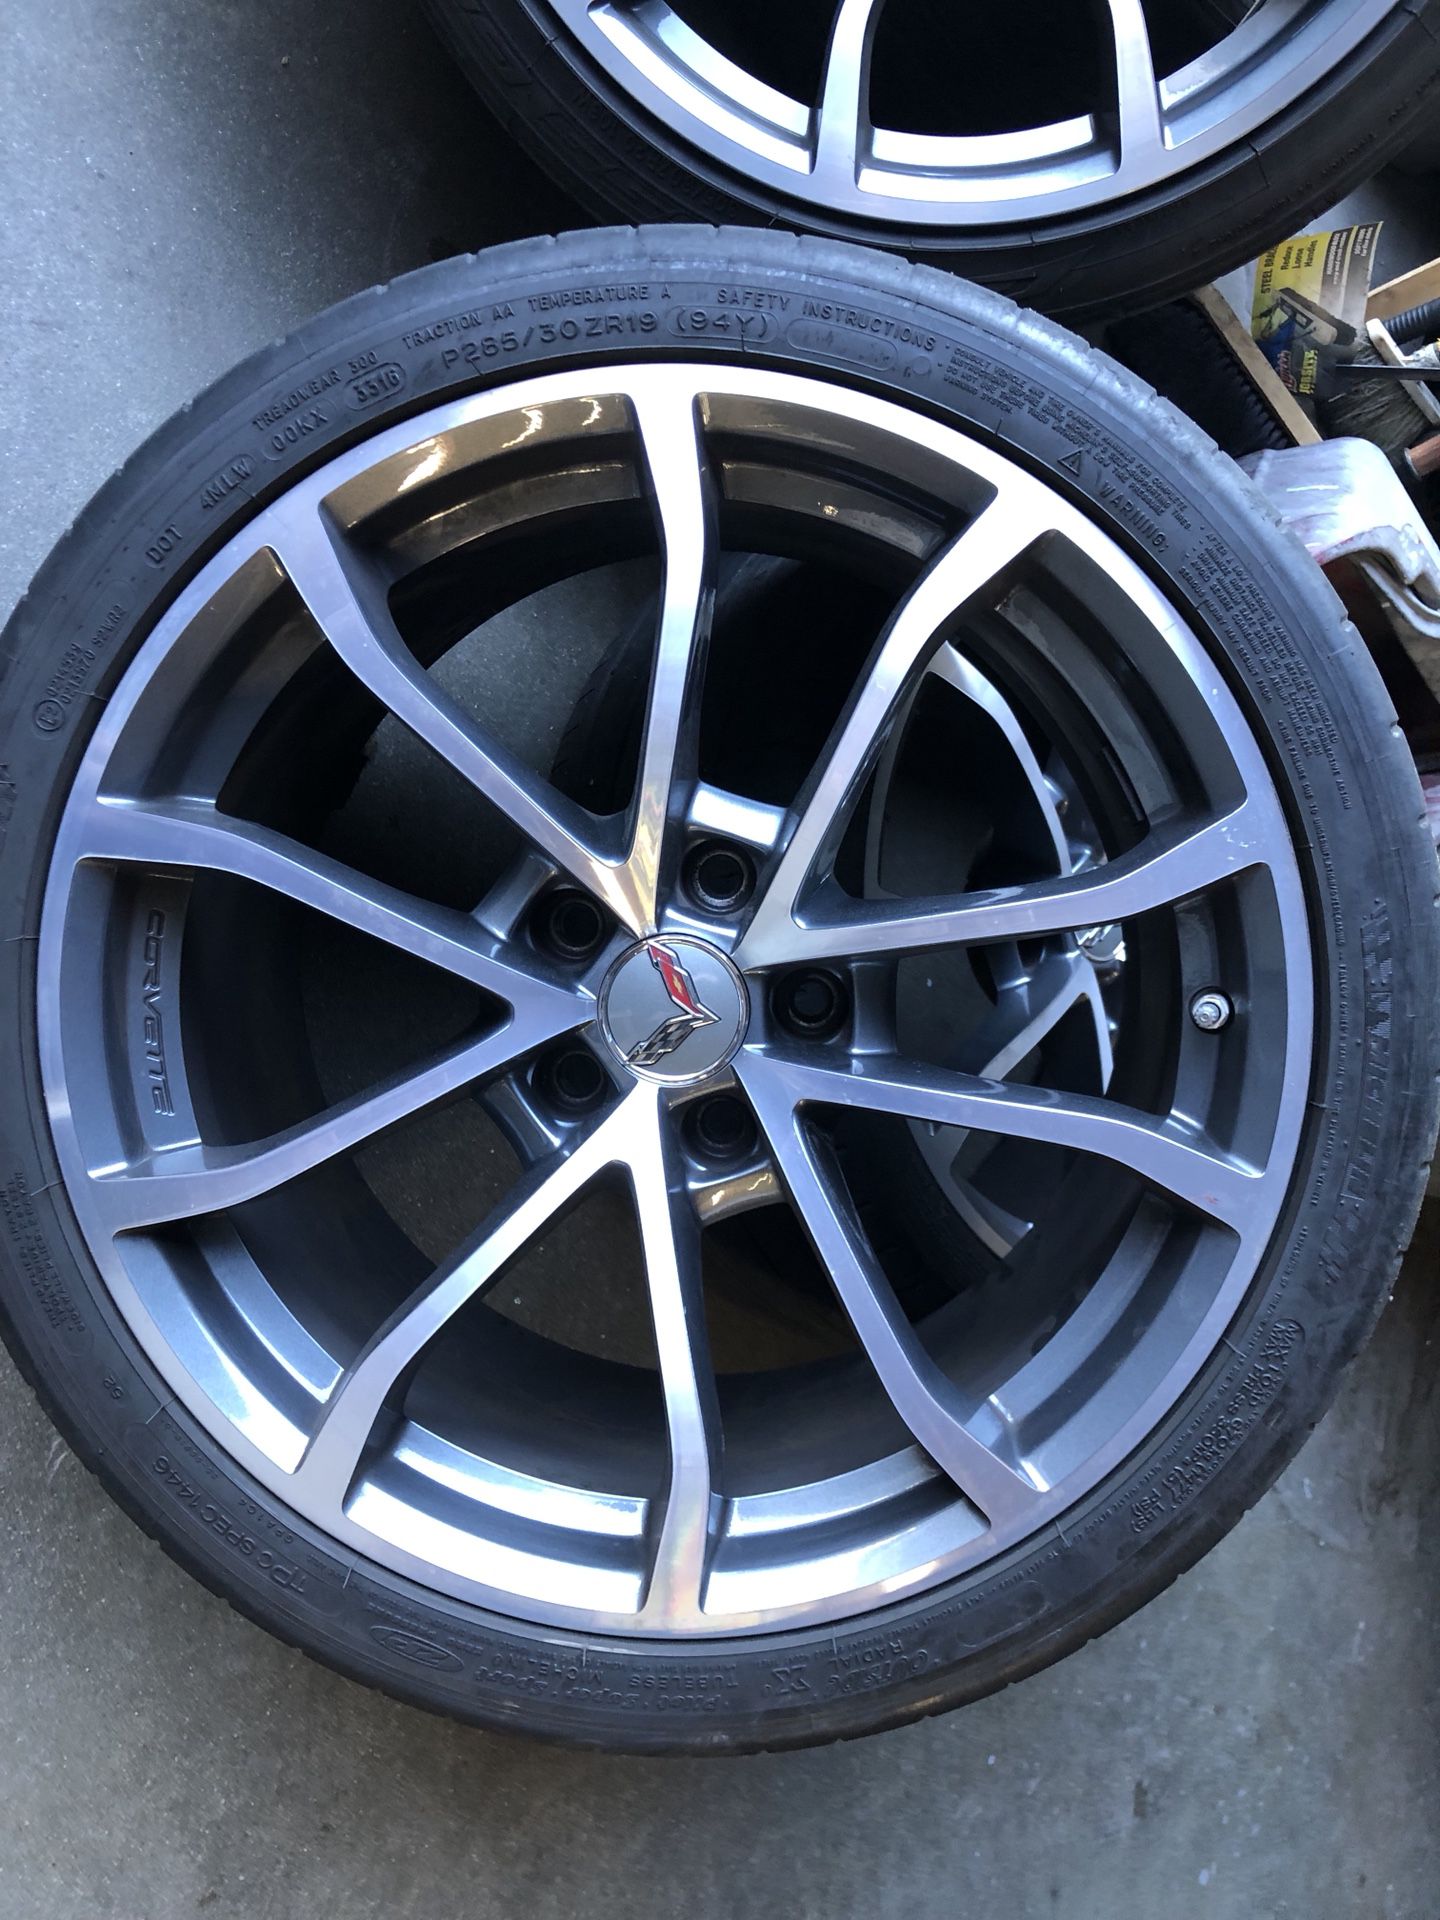 Corvette rims wheels comes with Michelin tires